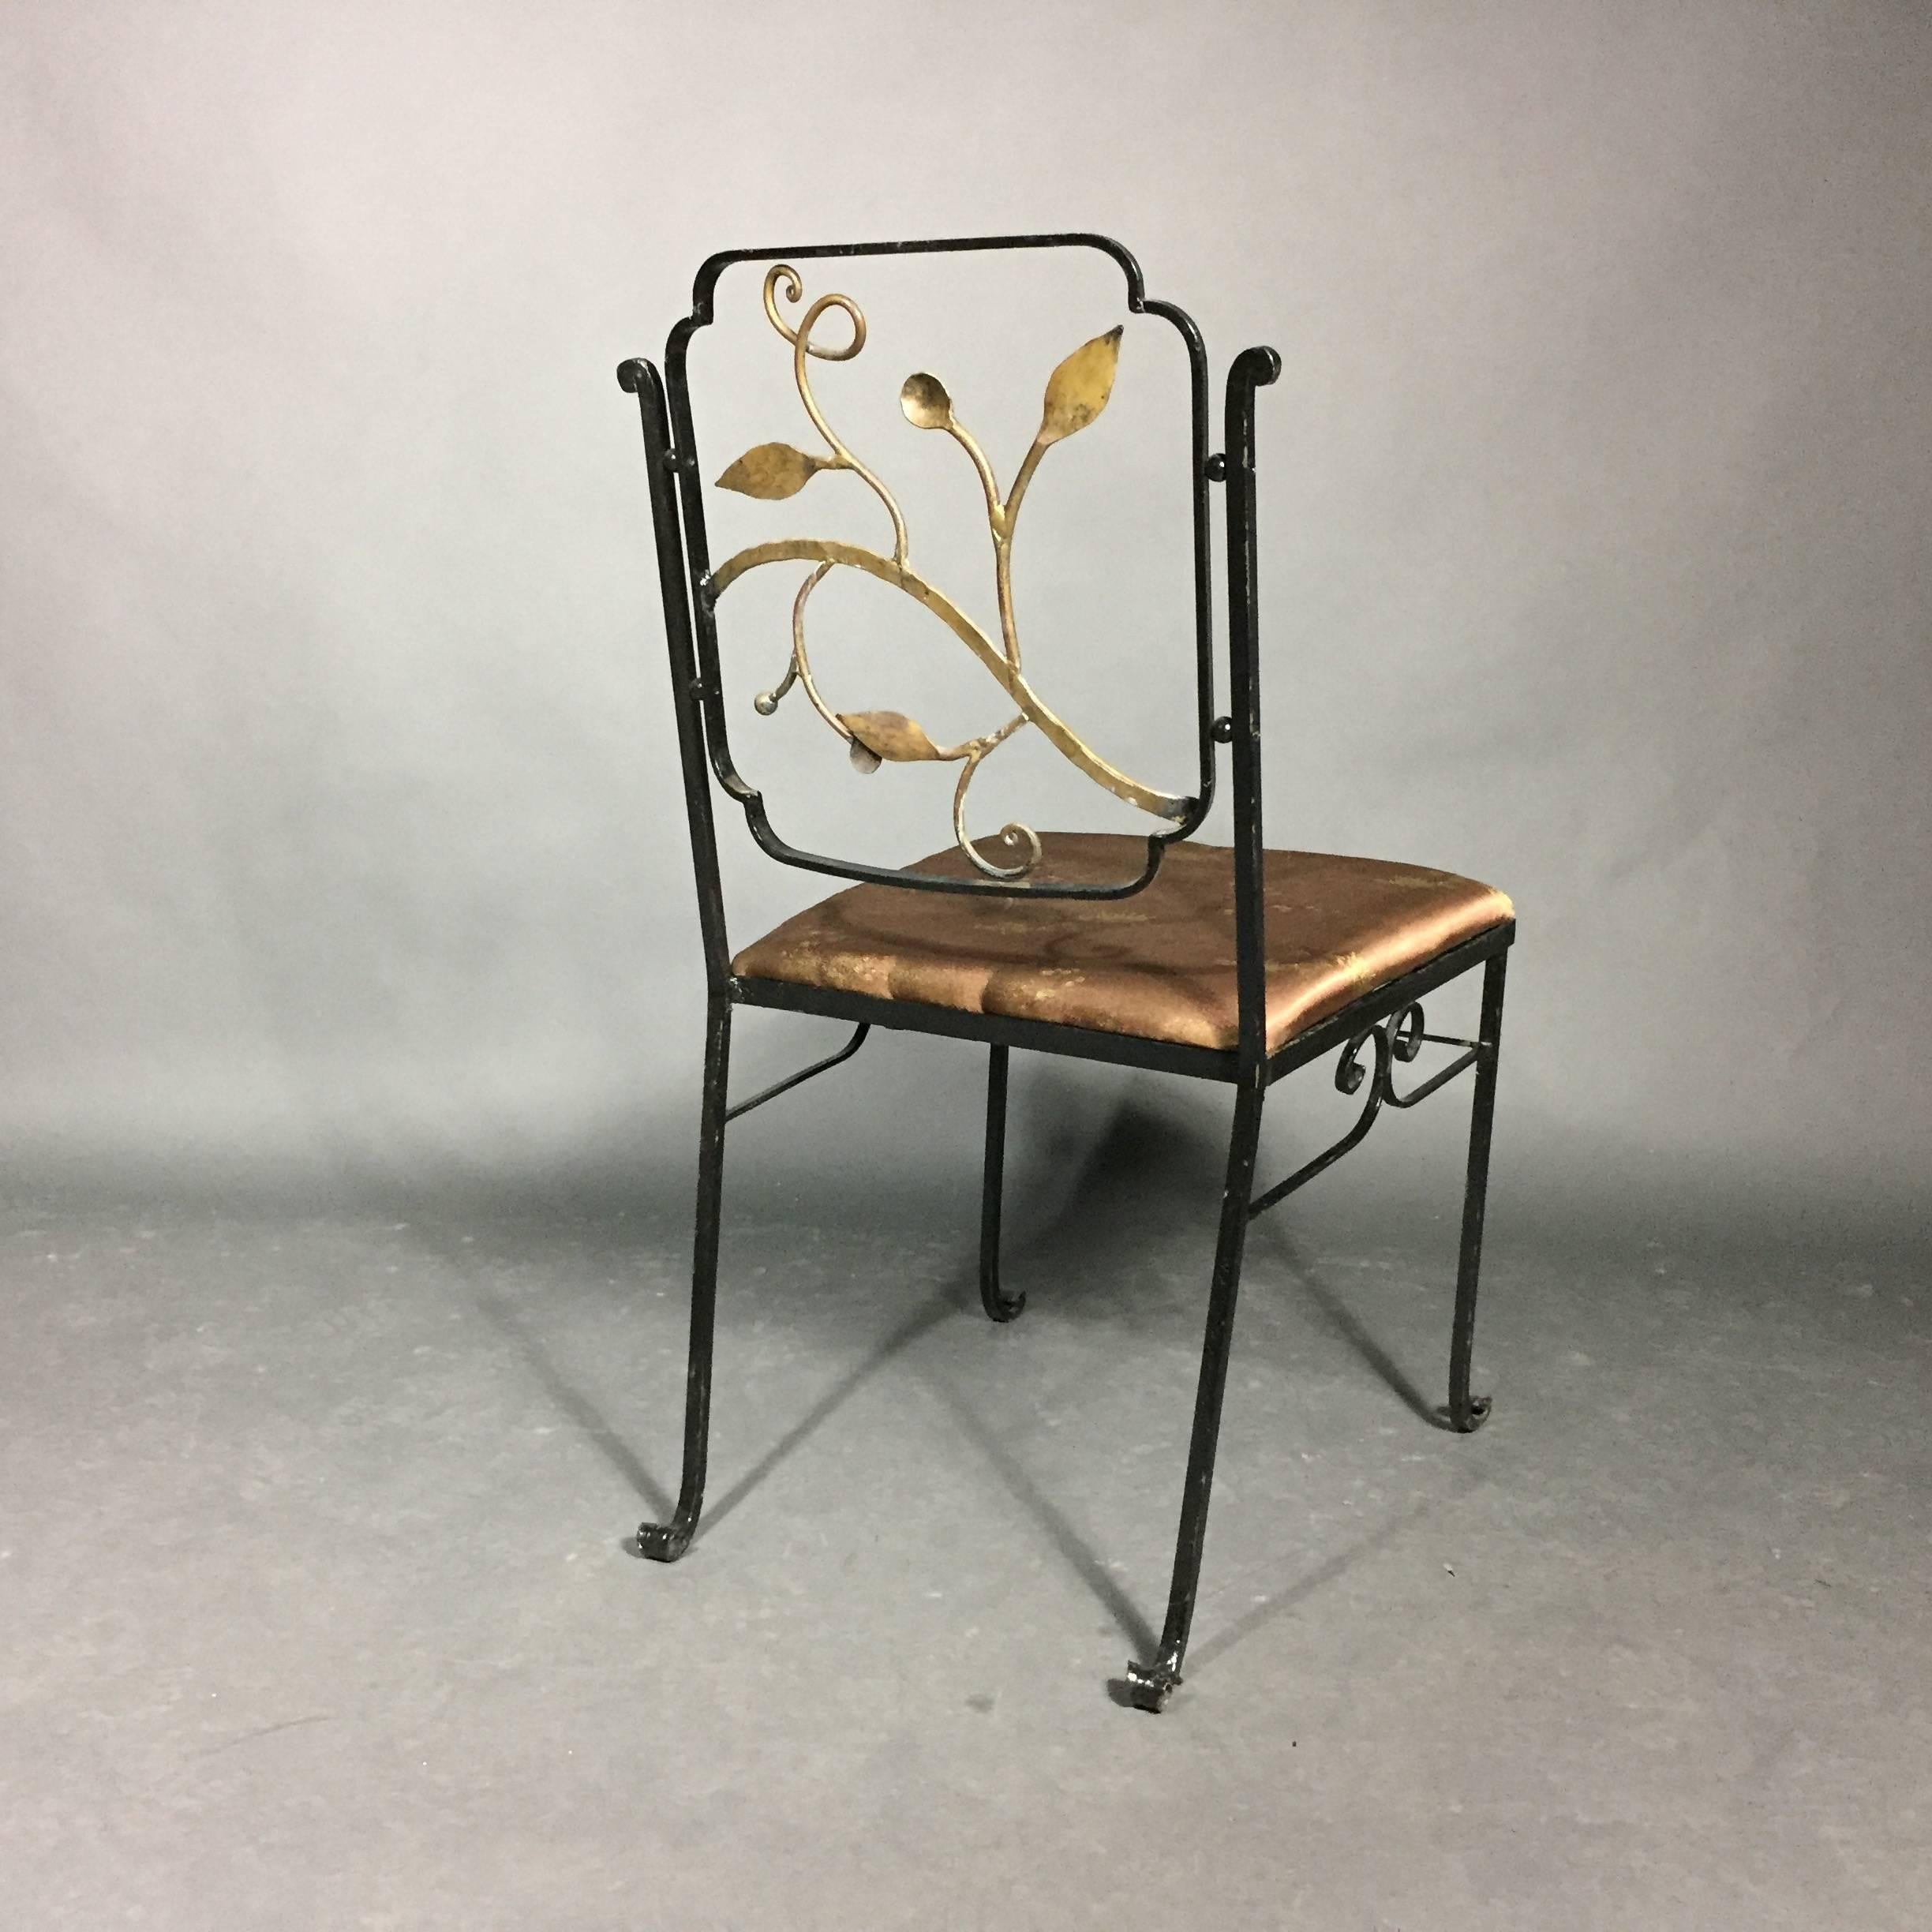 American 1920s Bronze and Iron Garden Chairs Attributed to Florentine Craft Studio